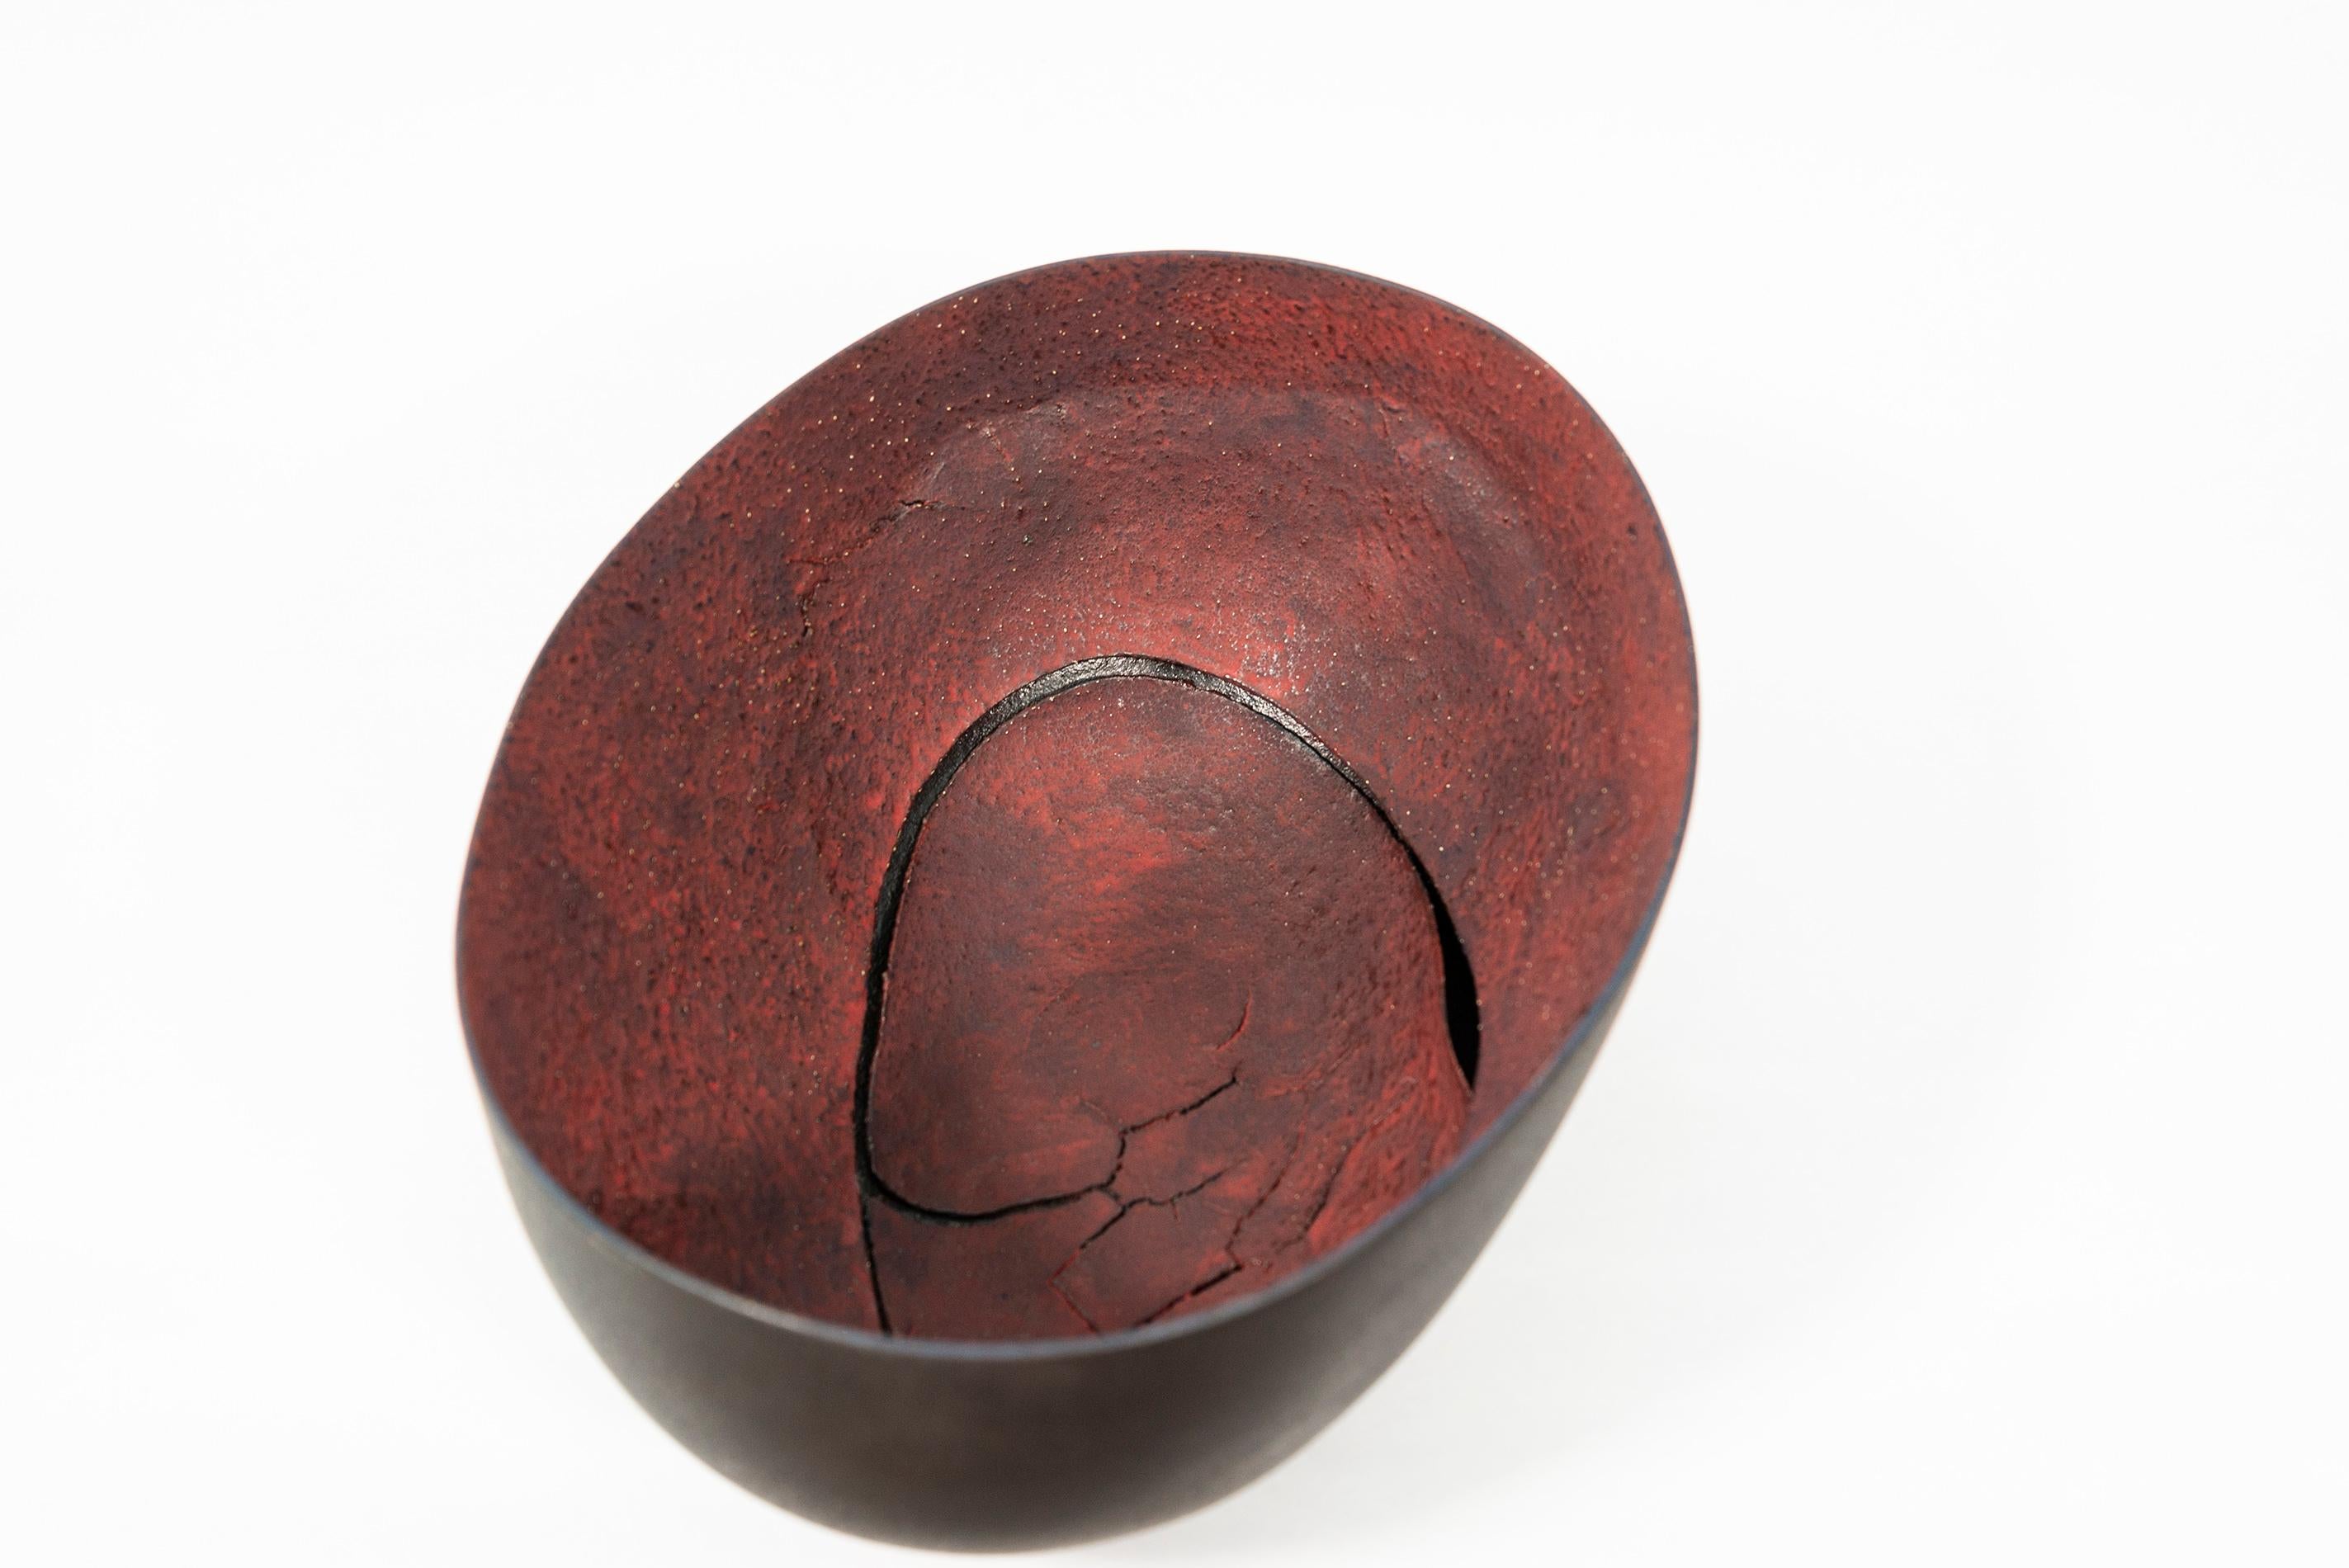 Untitled Bowl (Black) - black, red, nature inspired, textured, ceramic vessel For Sale 7